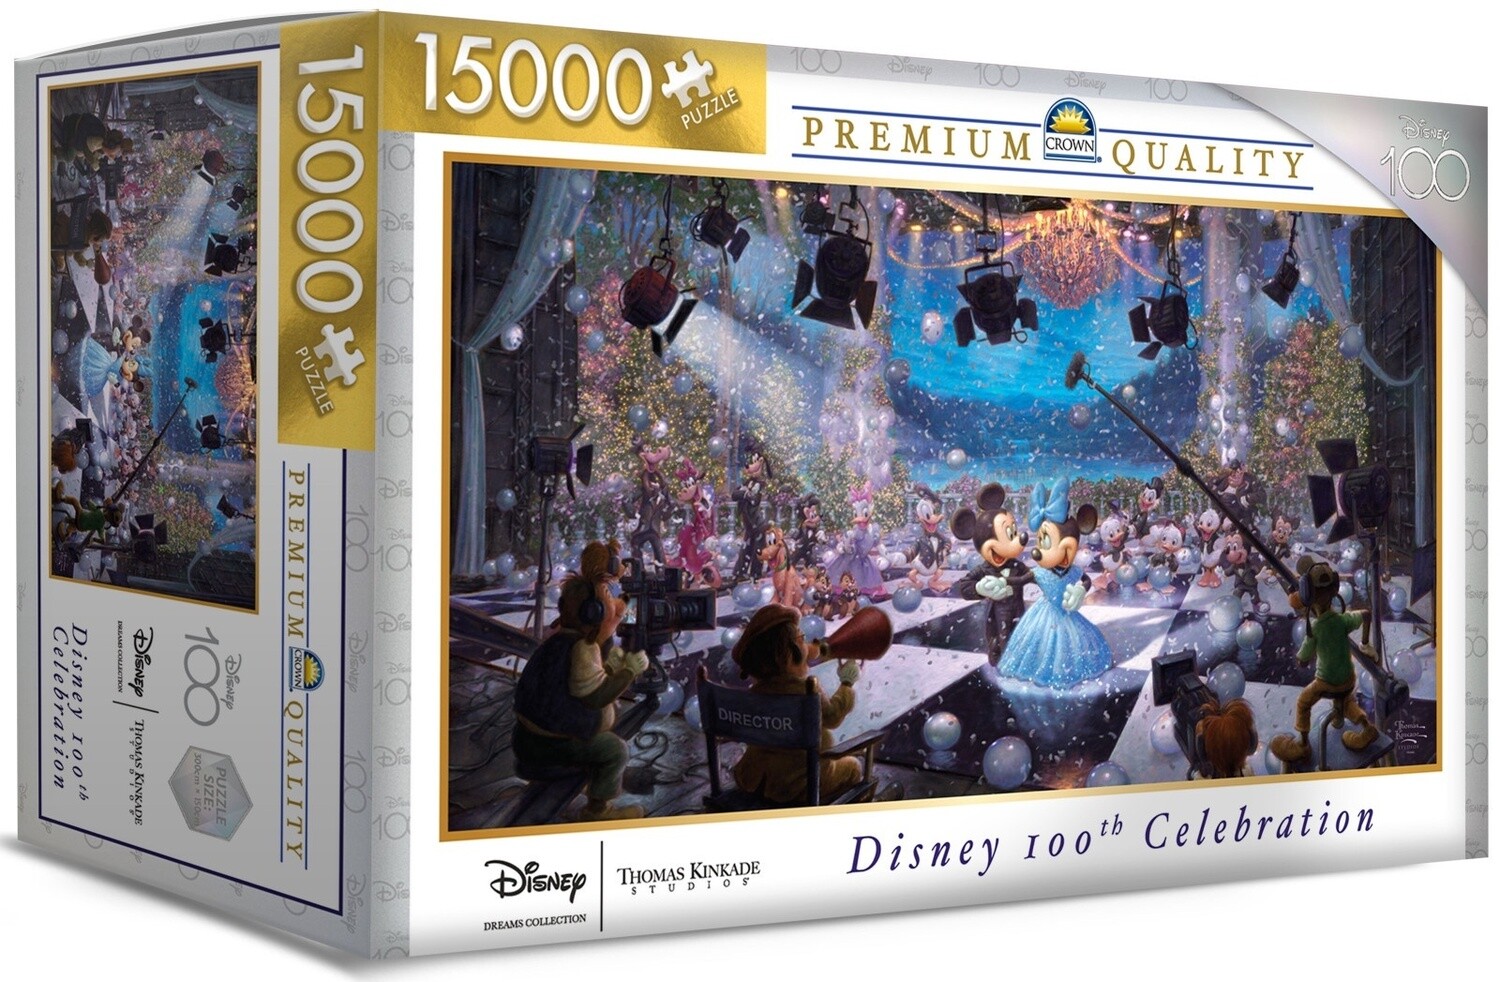 Harlington Thomas Kinkade Disney 100th Celebration Puzzle 15000 pieces